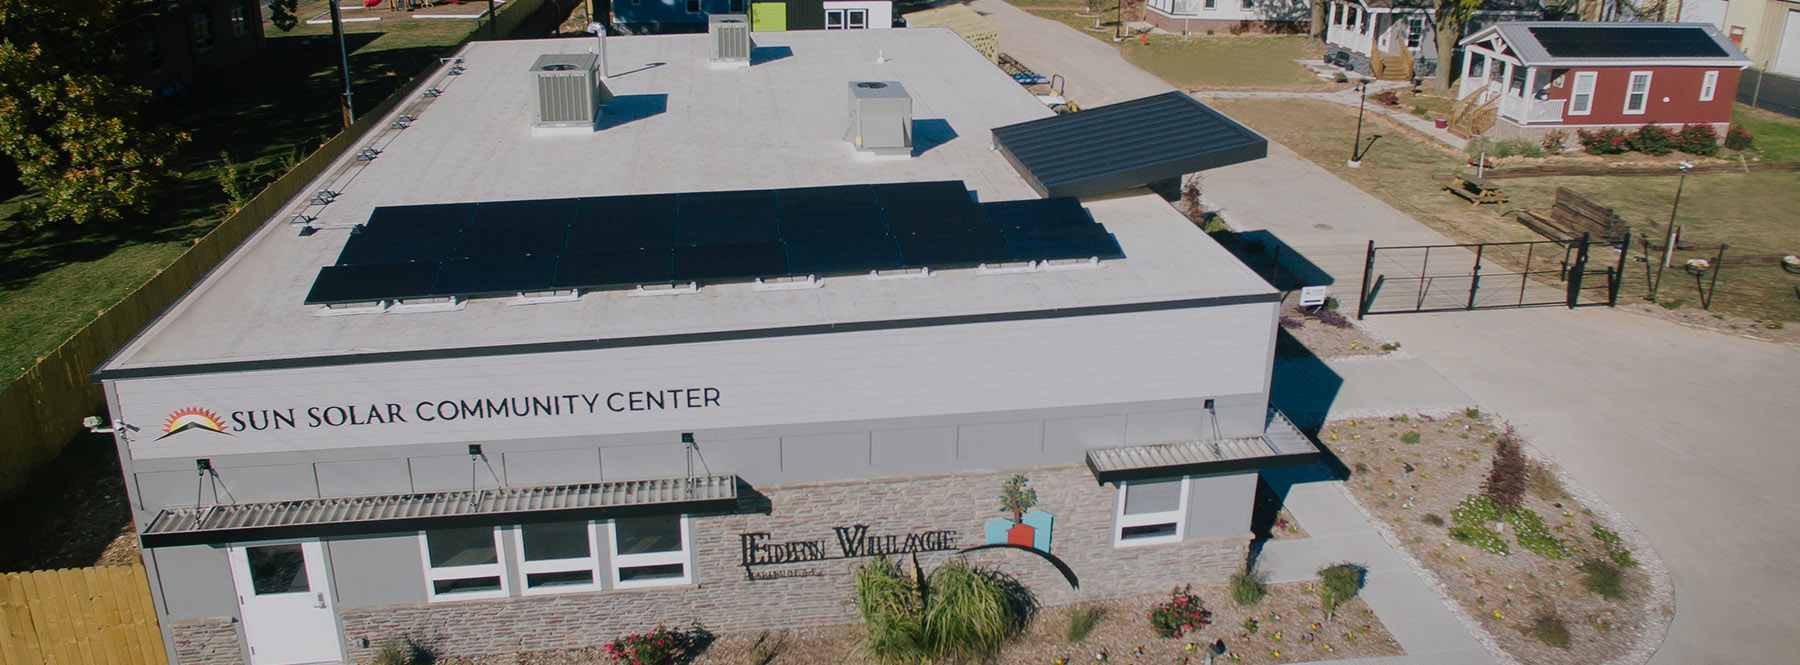 The Sun Solar Community Center at Eden Village in Springfield, MO.